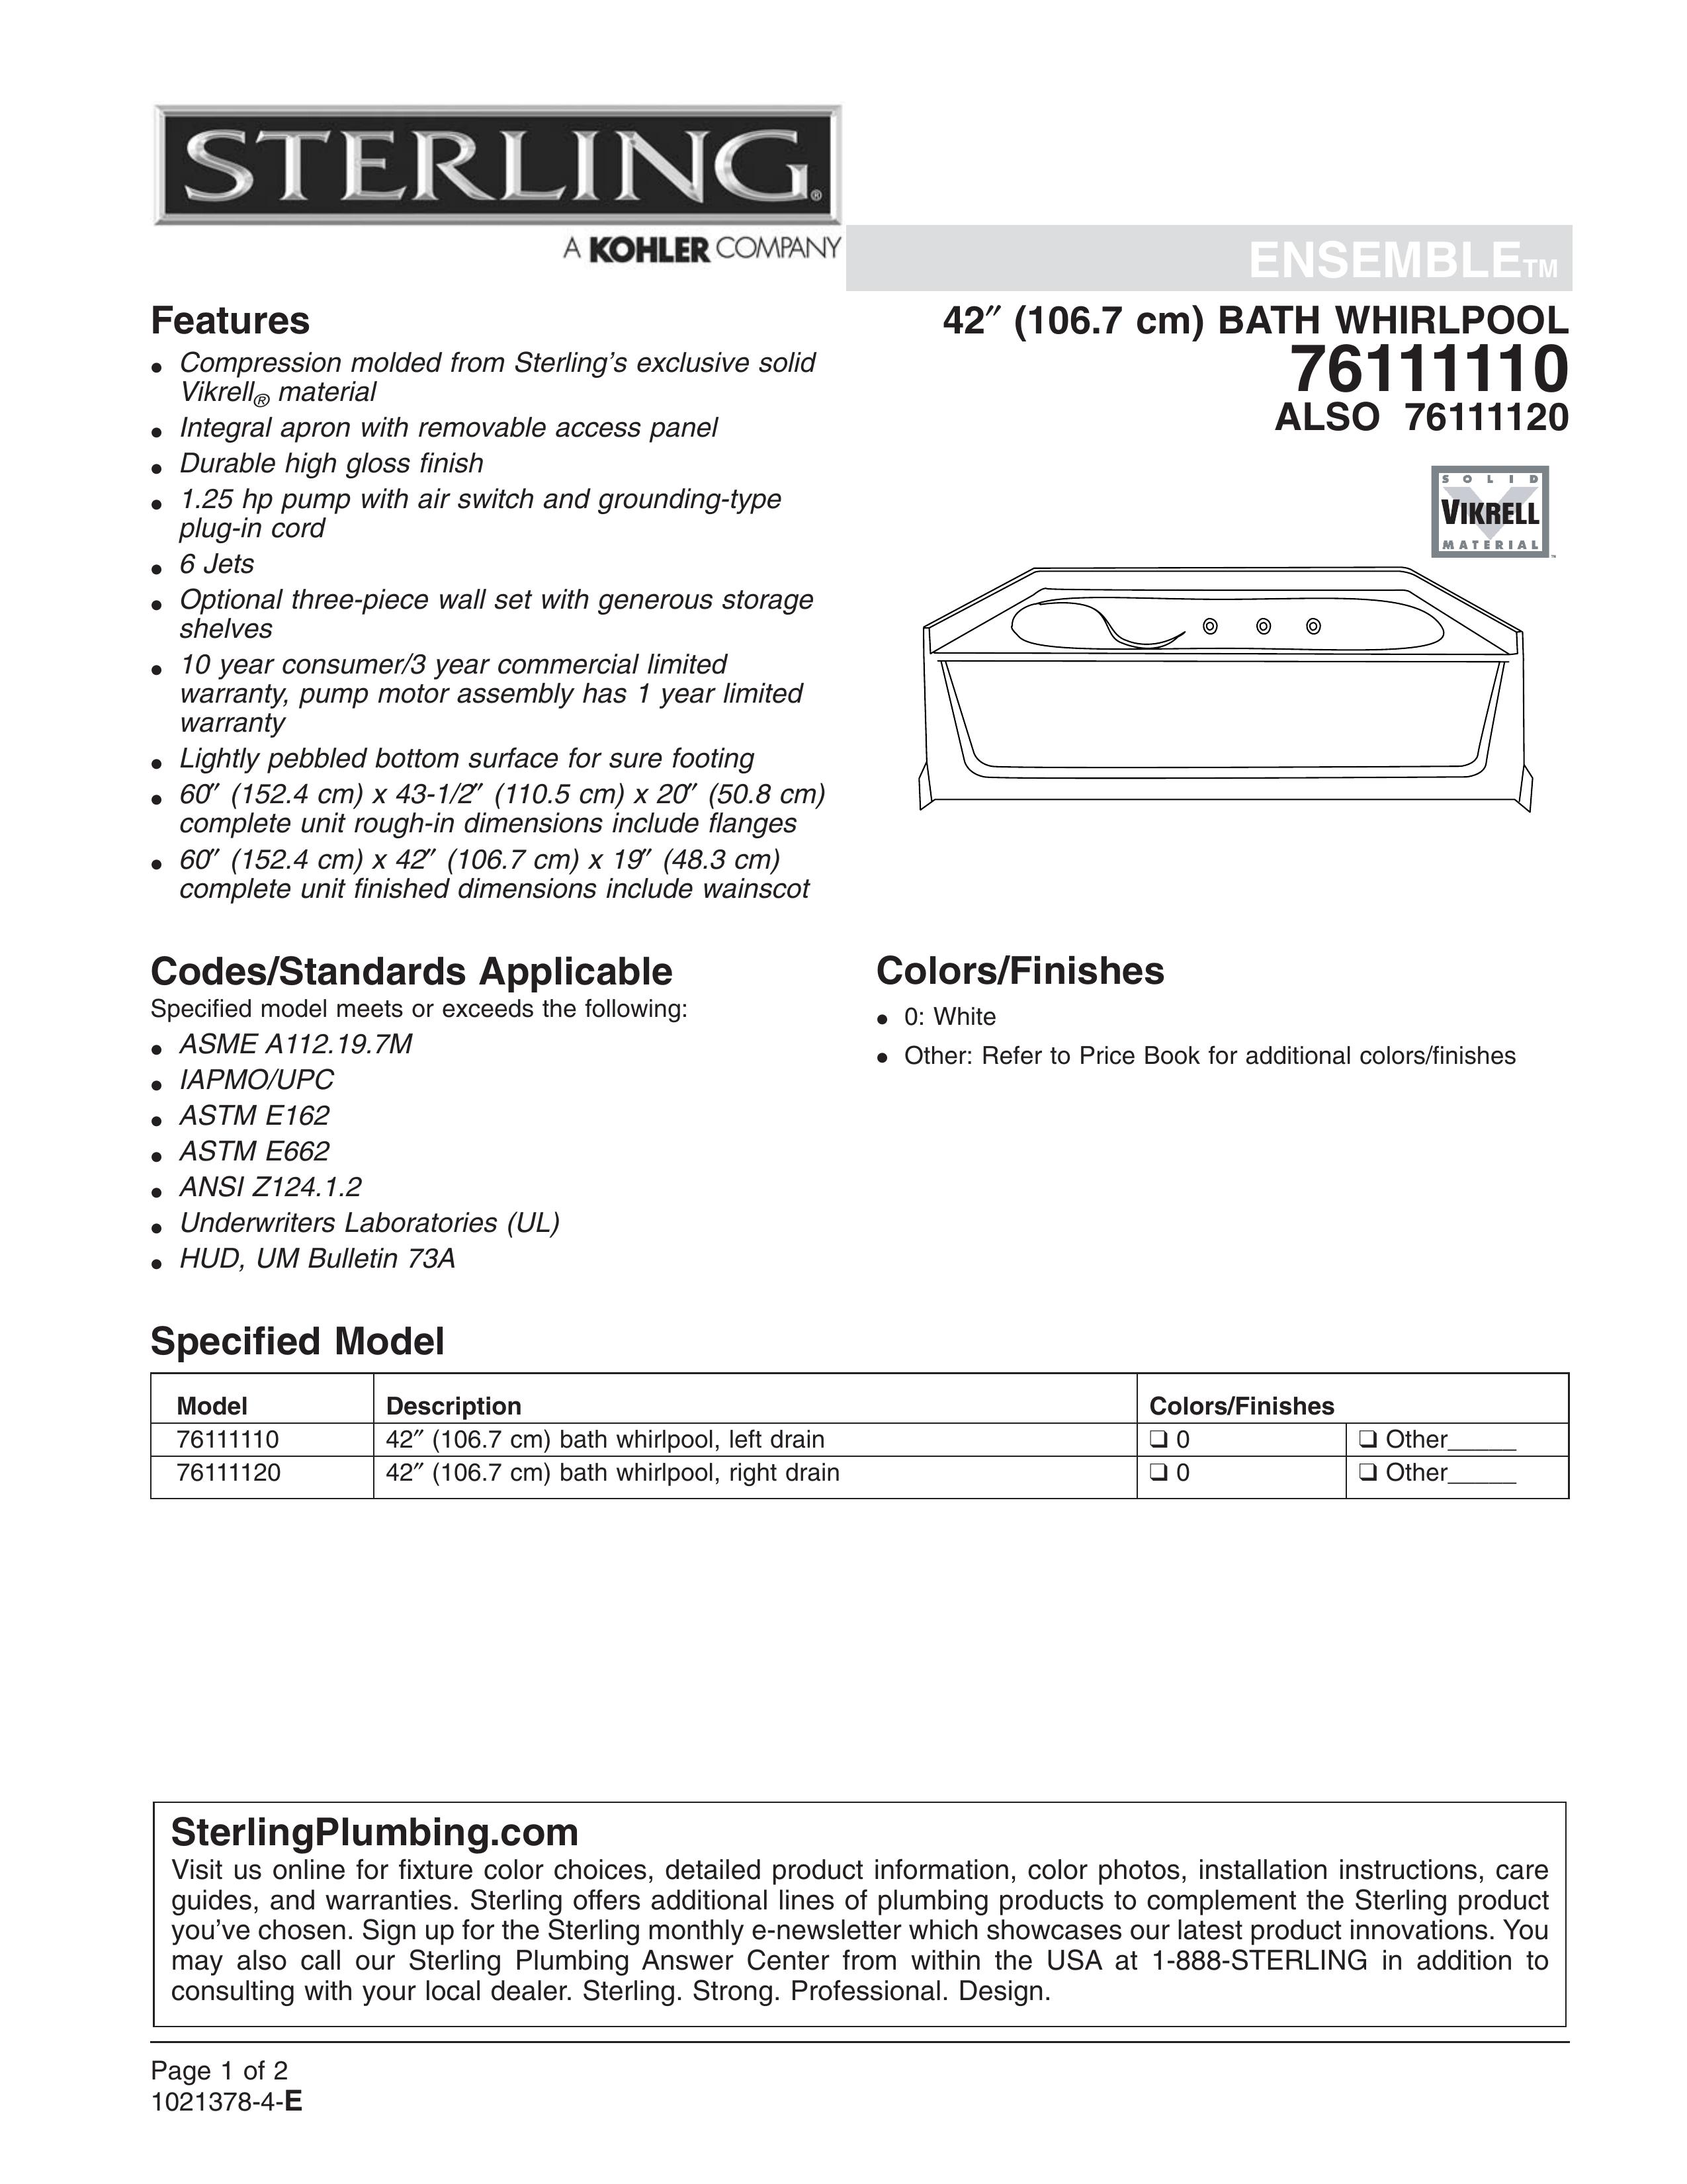 Sterling Plumbing 76111120 Hot Tub User Manual